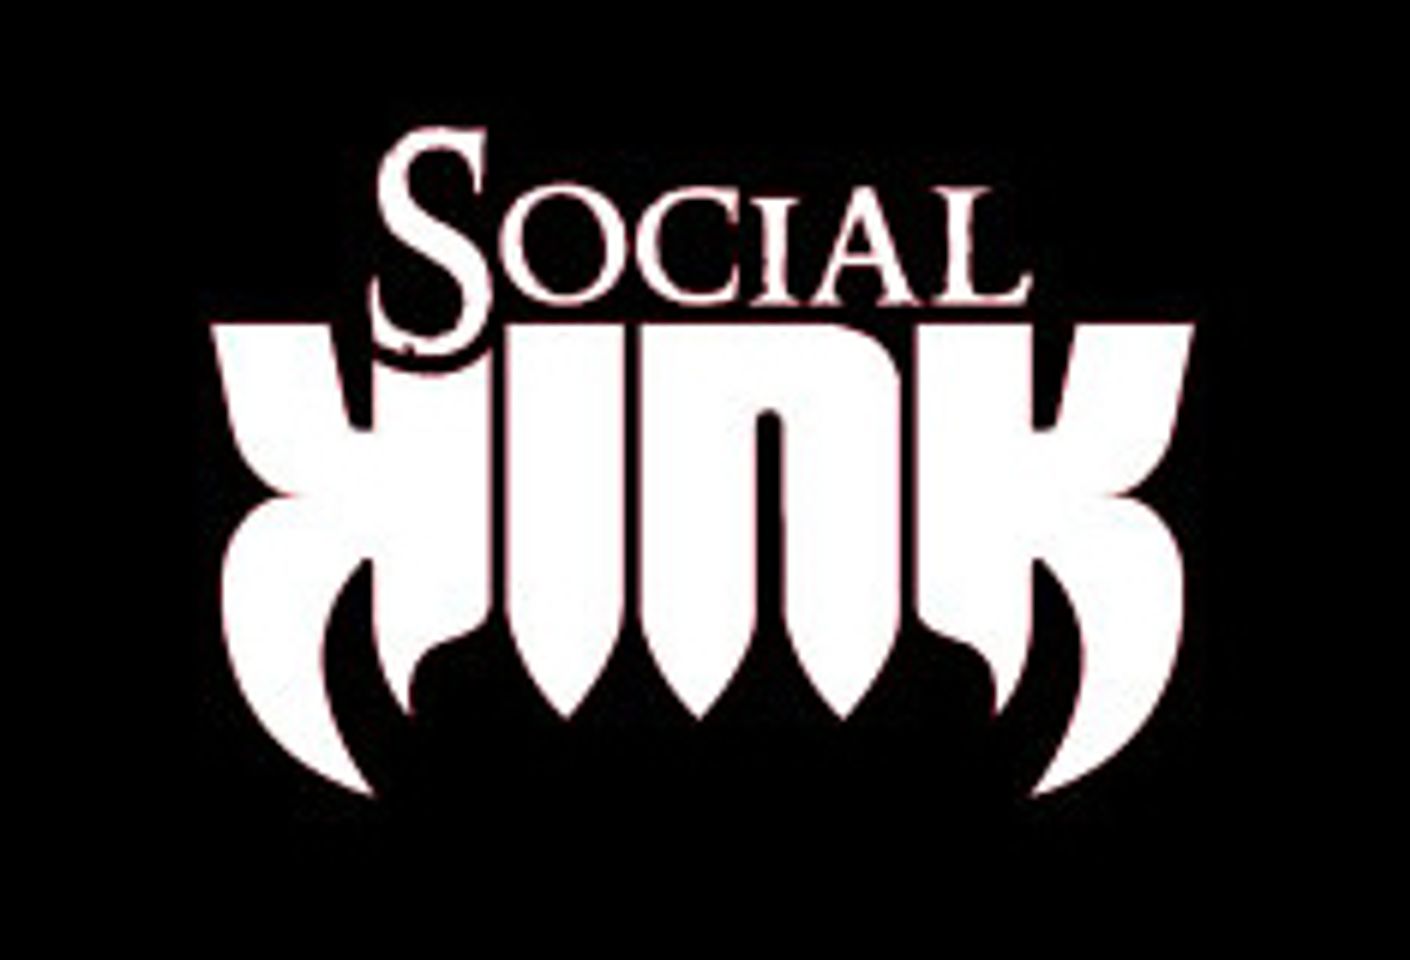 SocialKink Announces Winner of PuppyLove Valentine's Day Contest